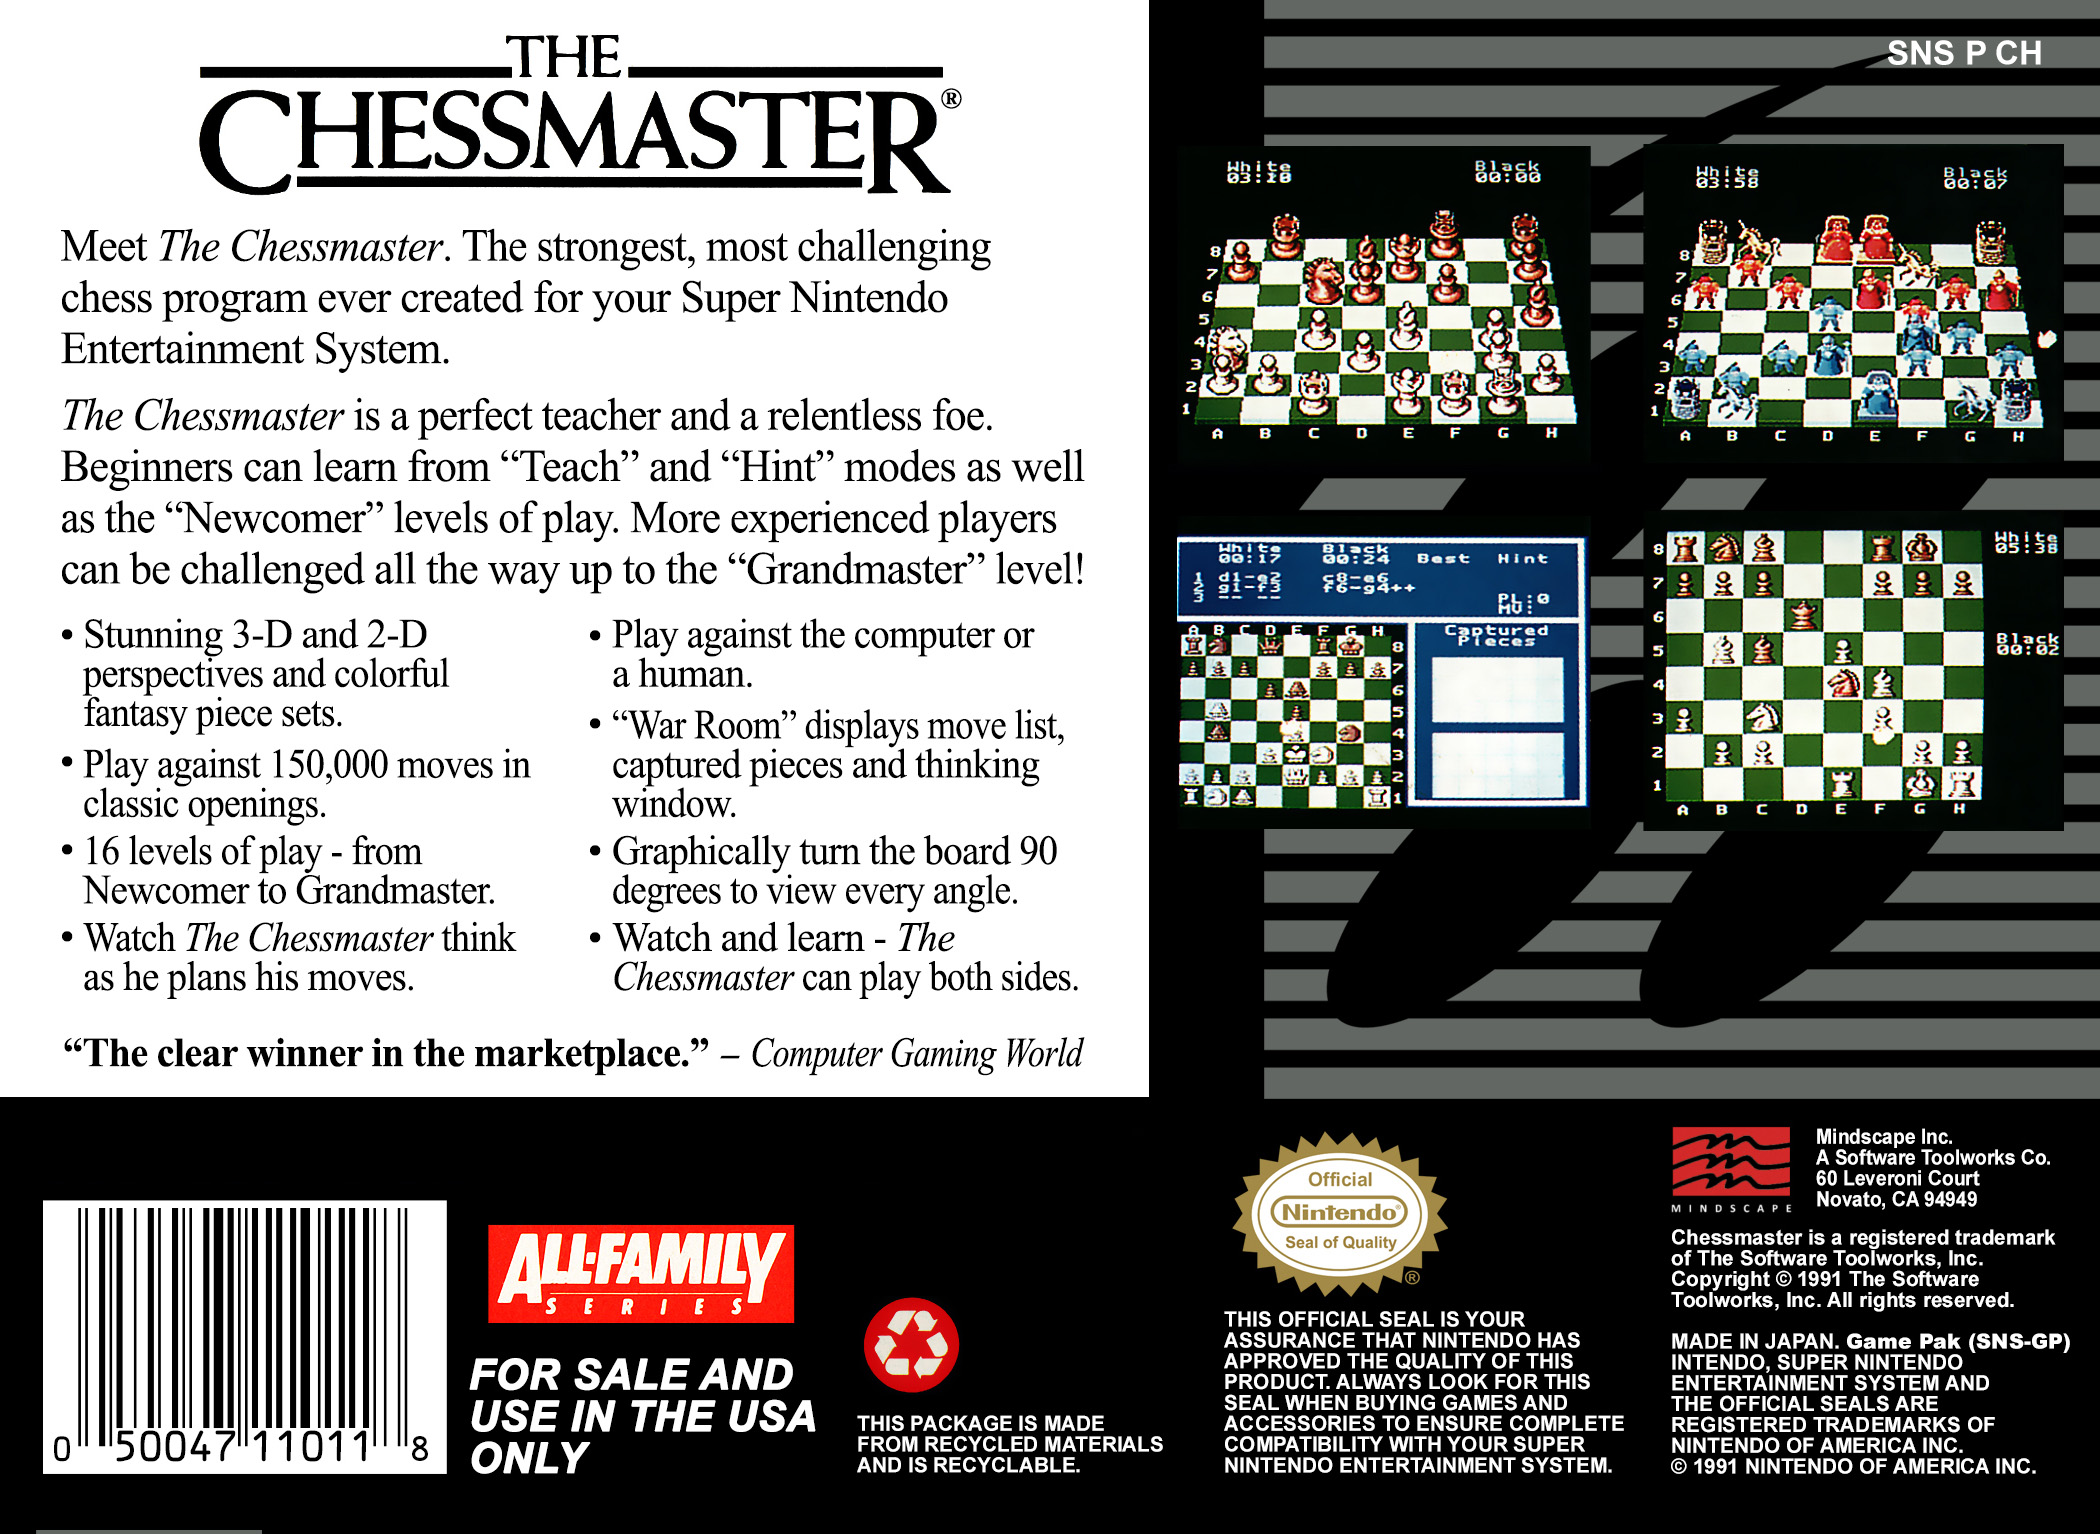 The Chessmaster 3000 Images - LaunchBox Games Database